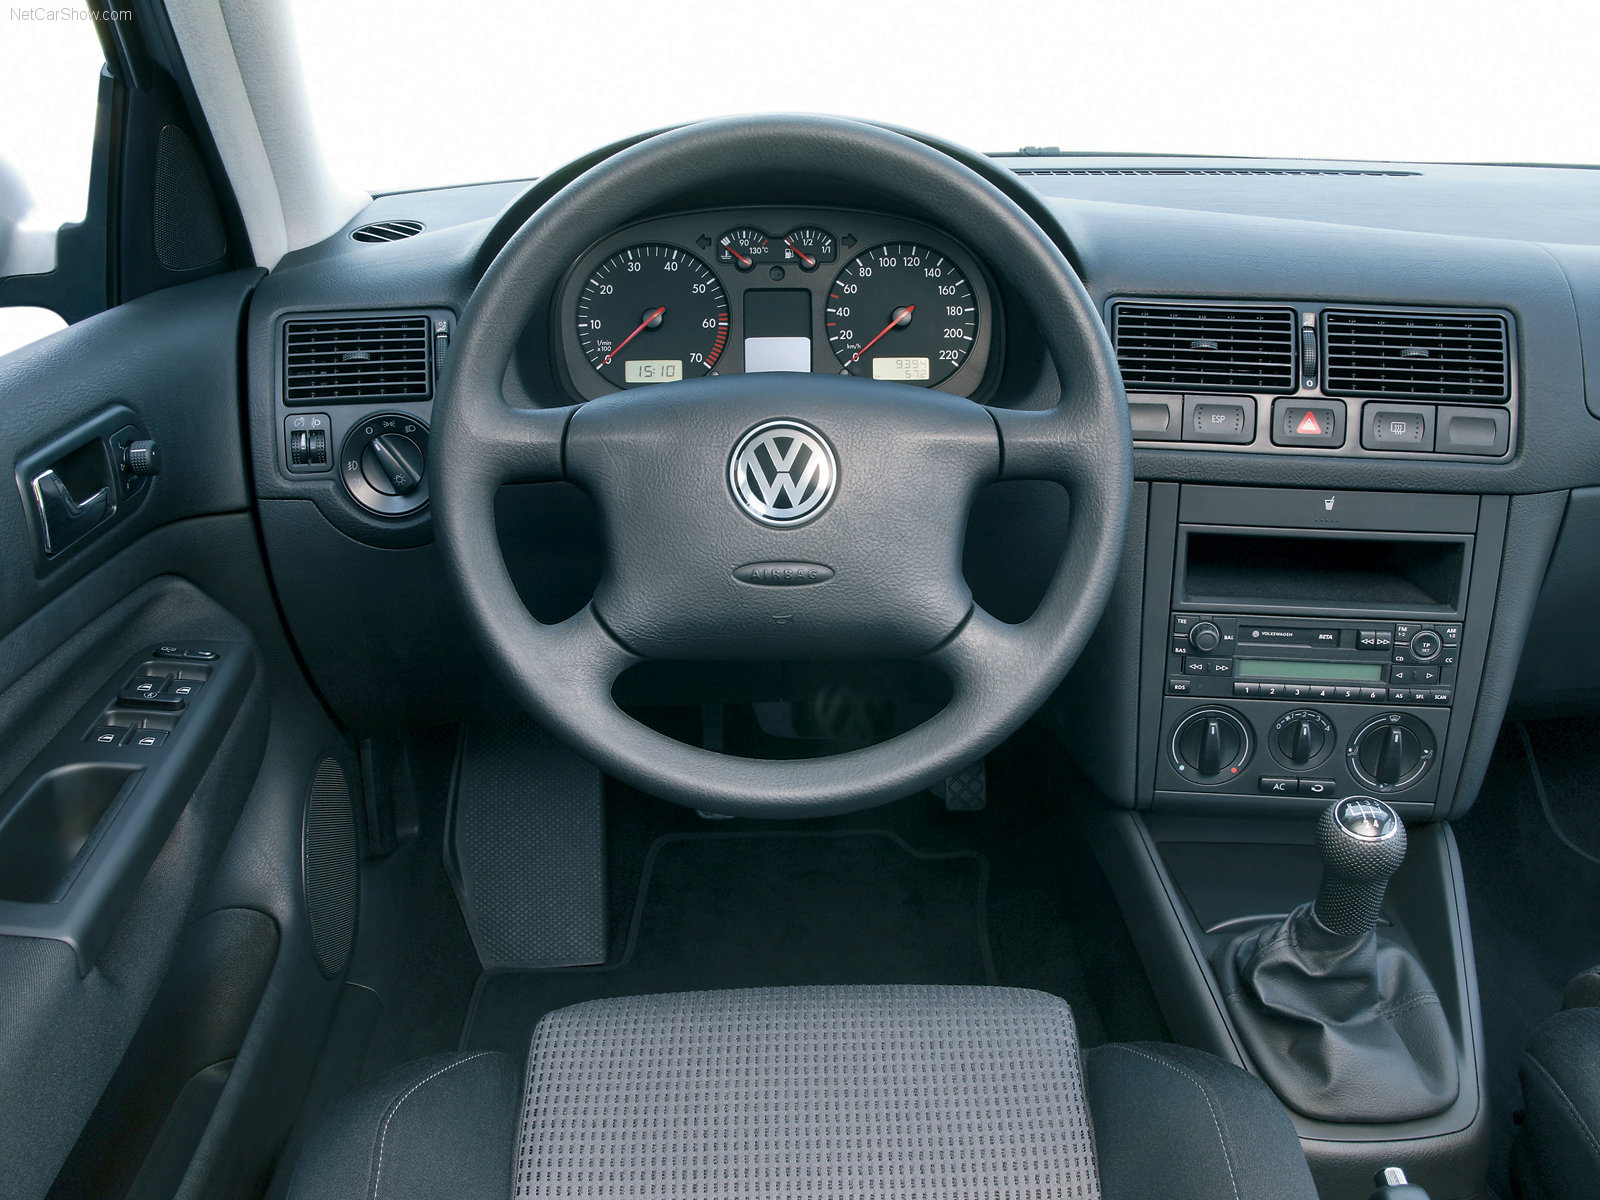 VW Golf 4 салон